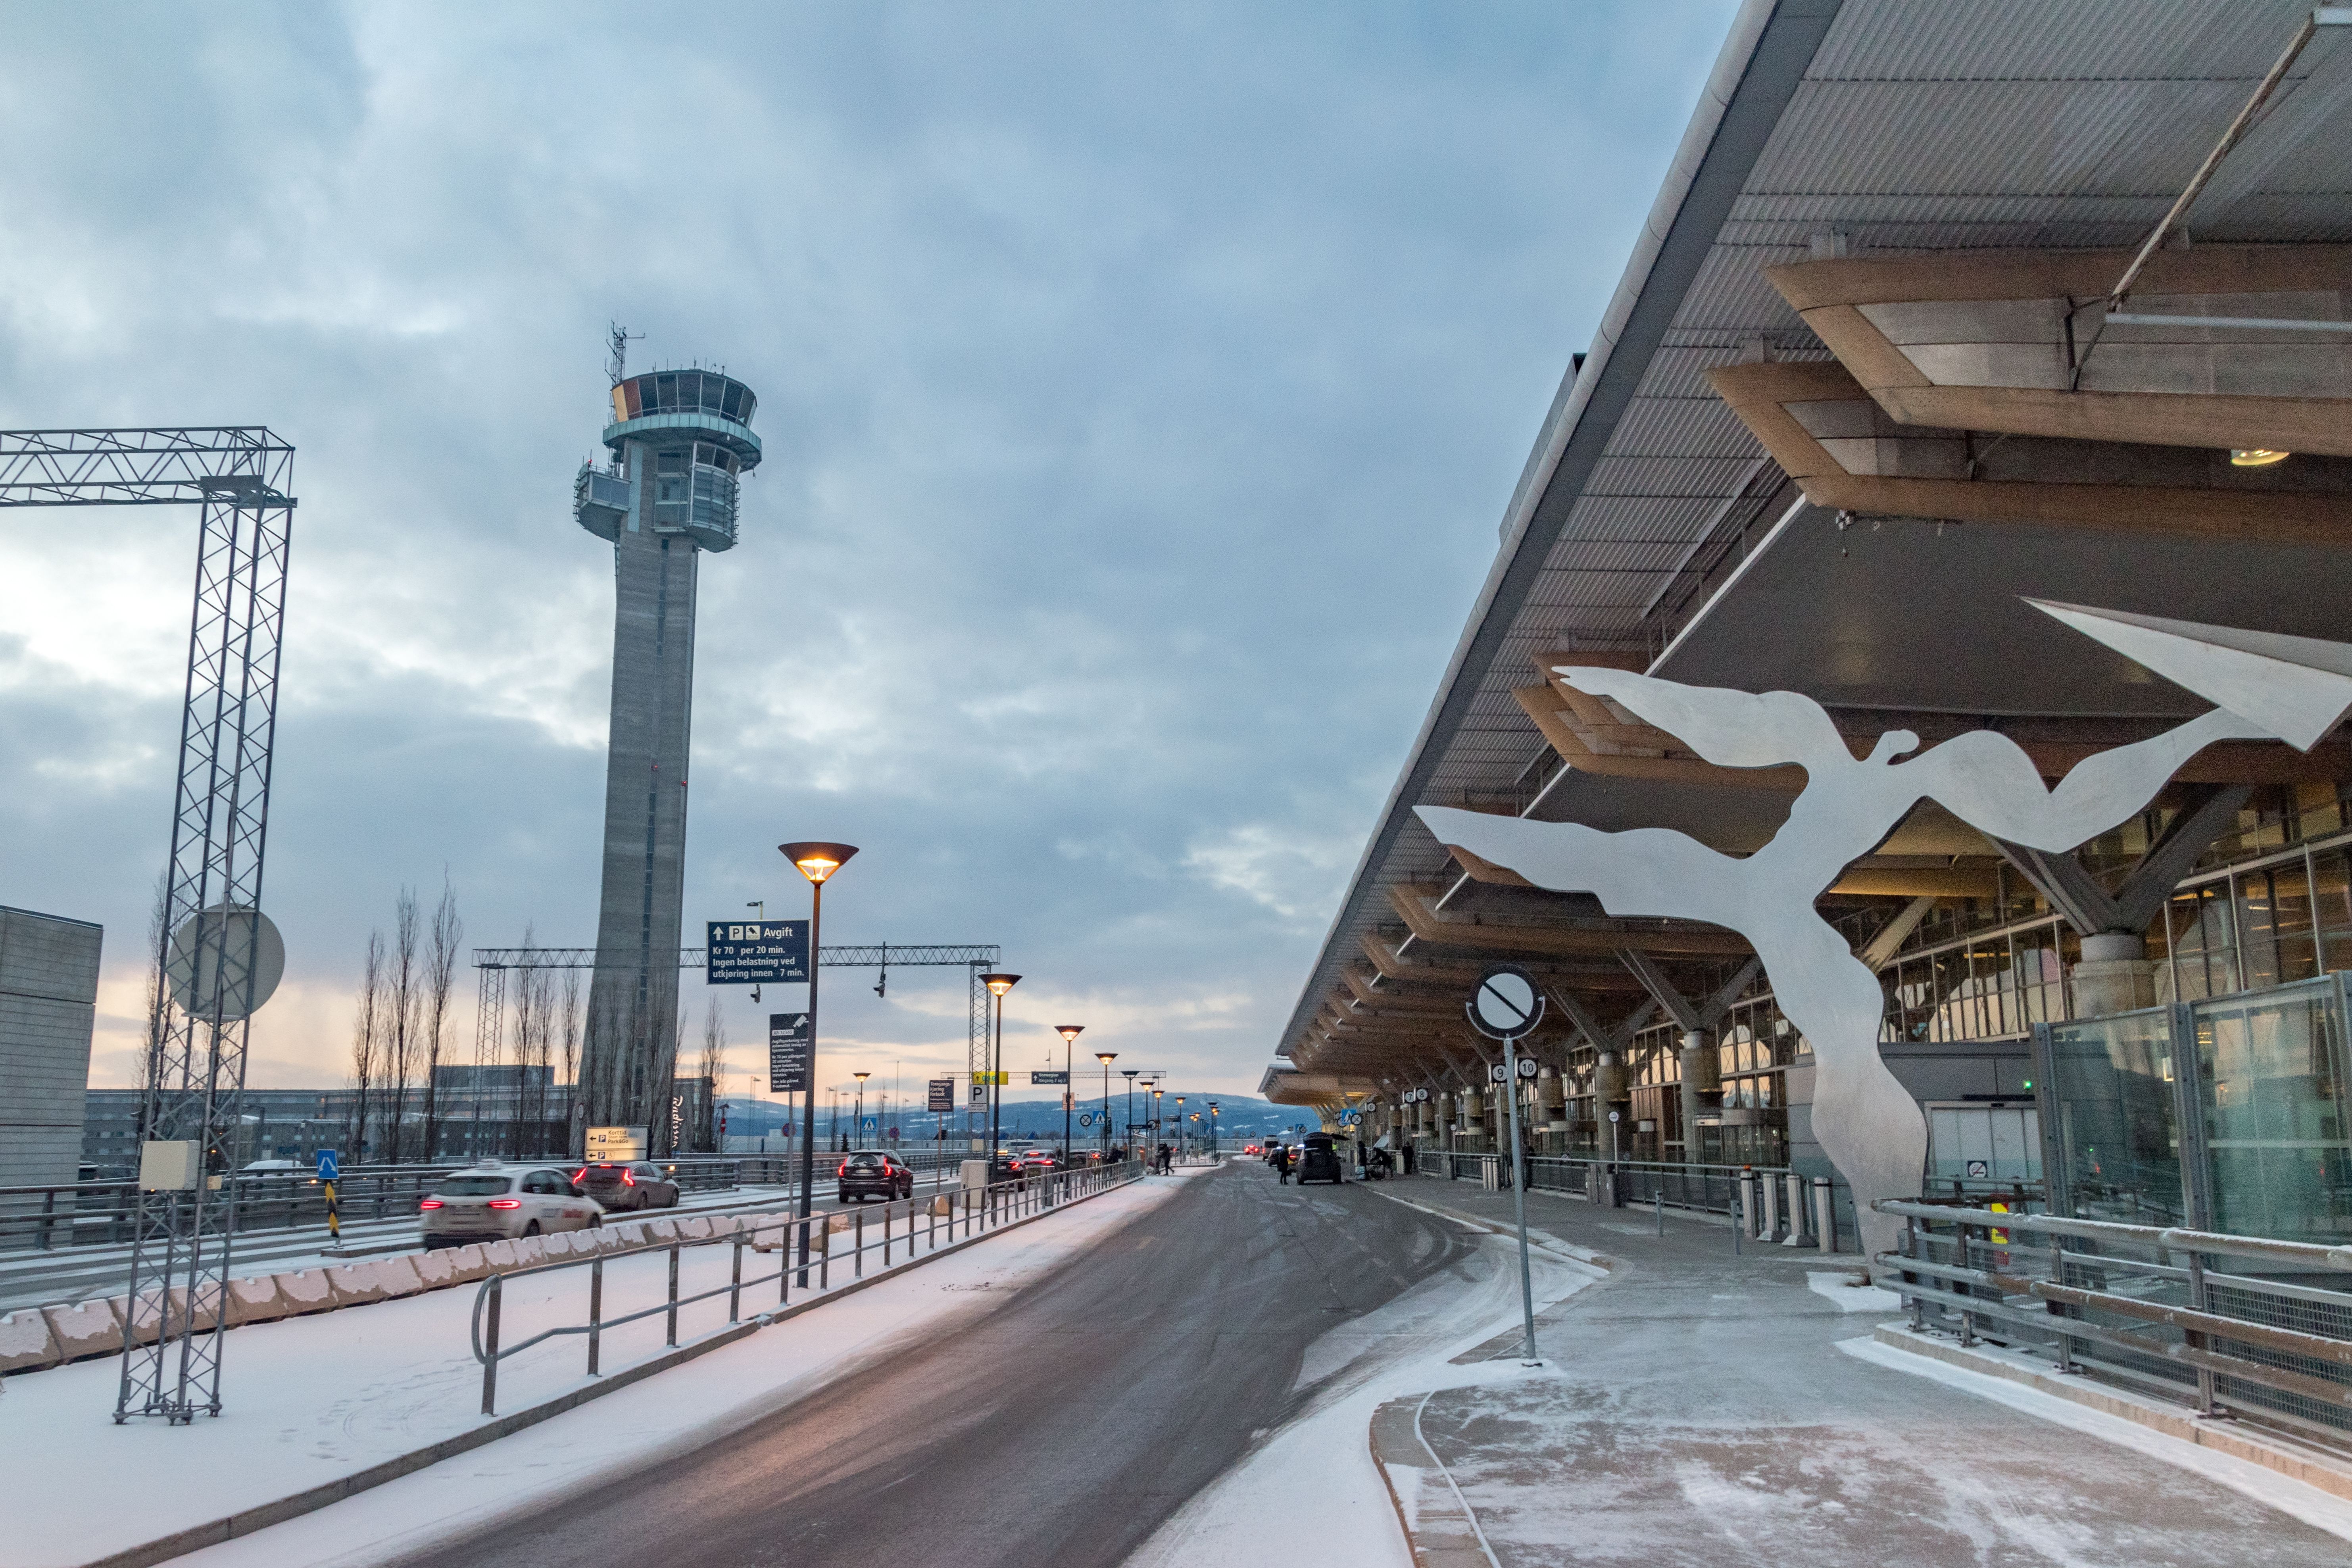 Oslo Gardermoen Airport in the snow